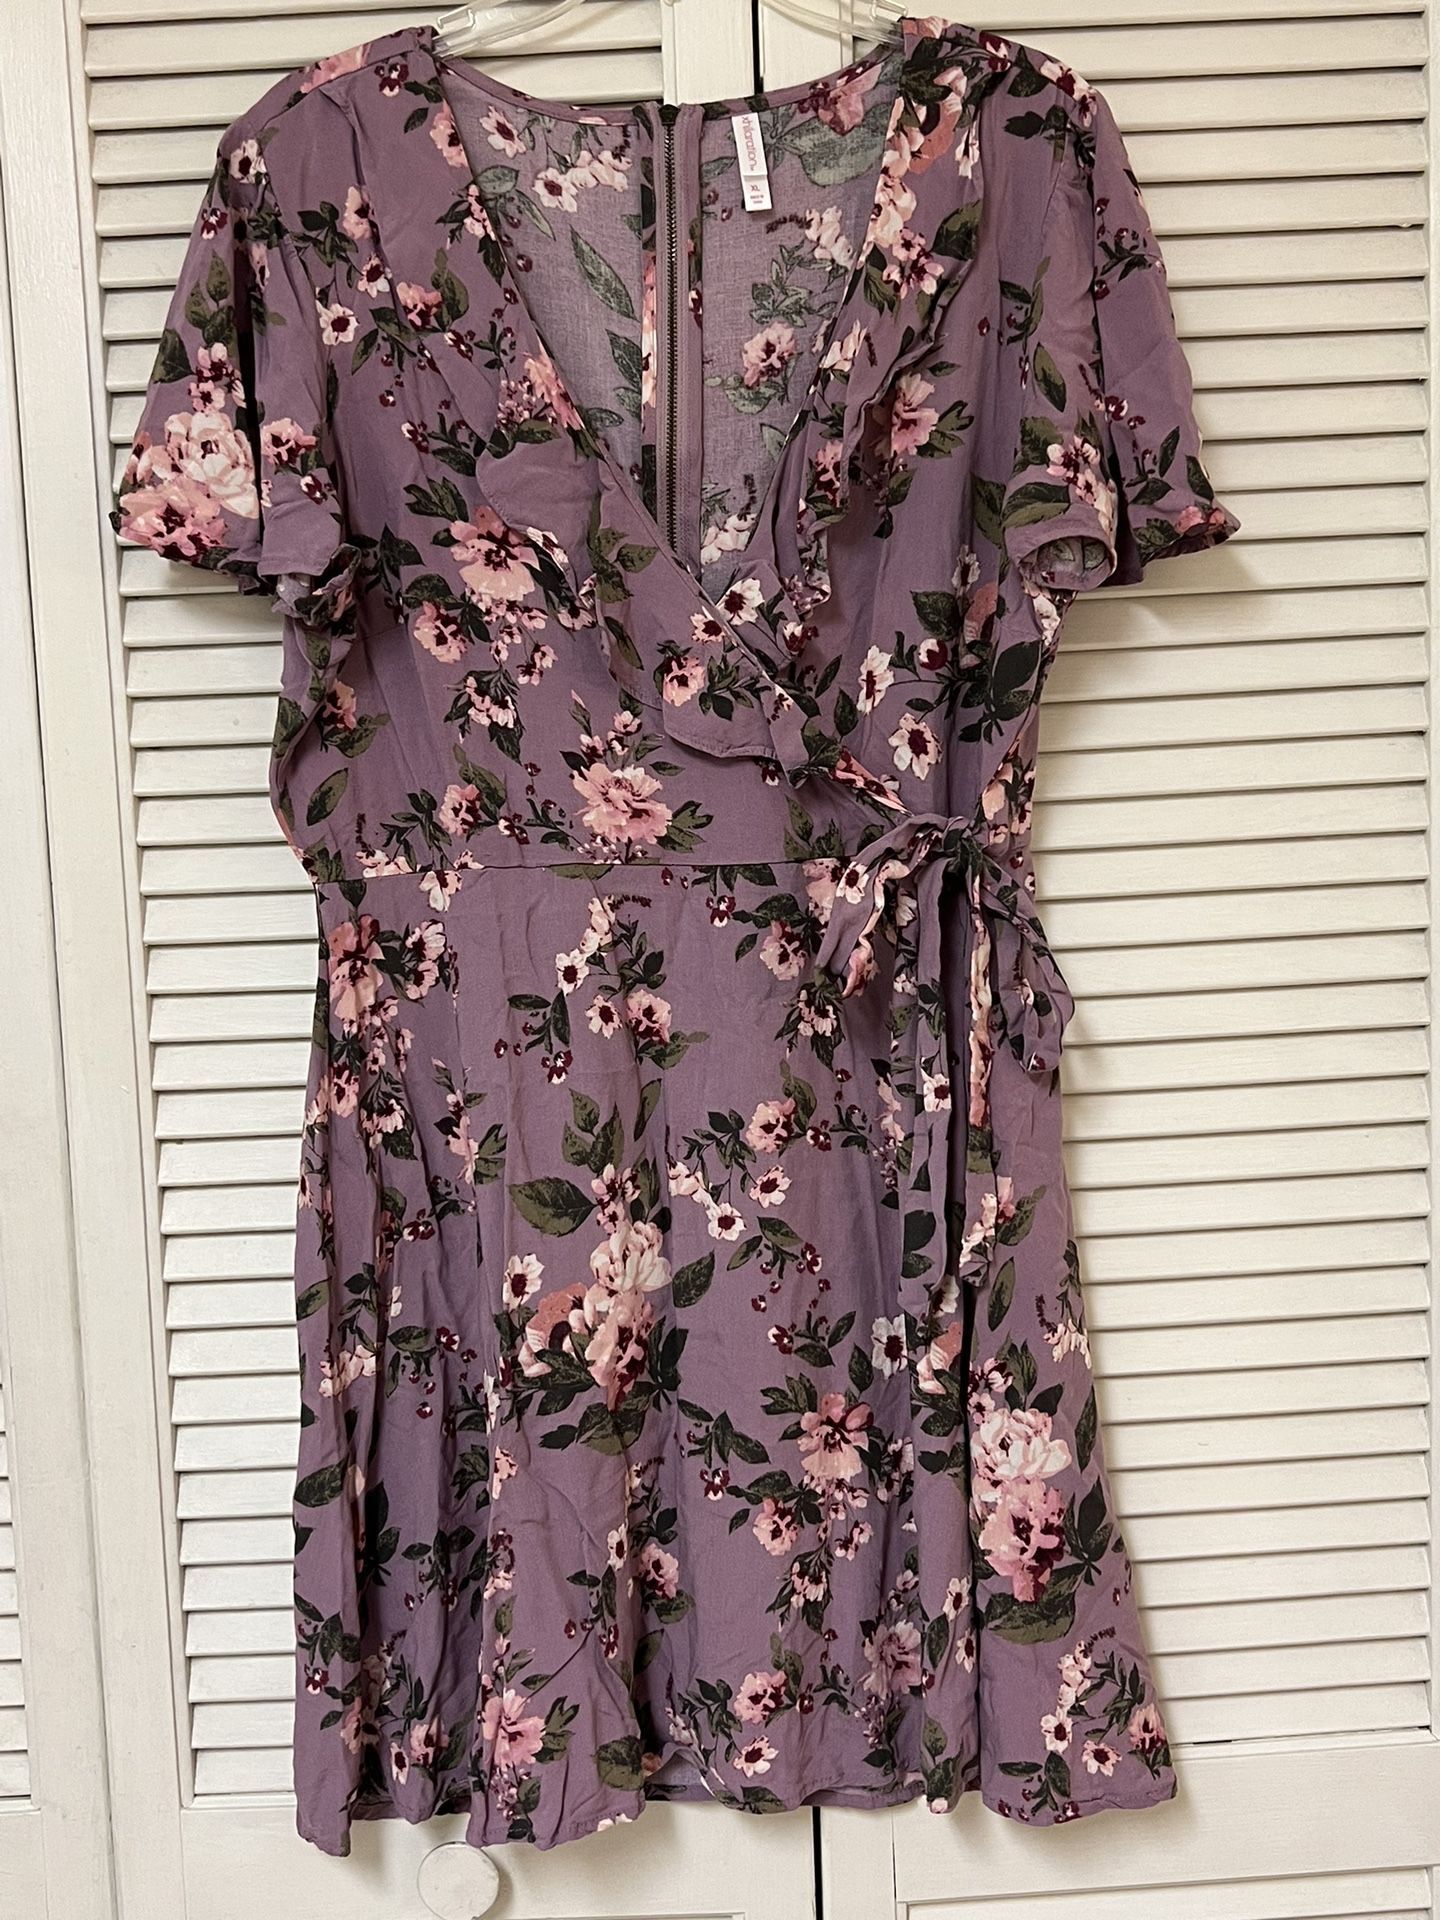 Xhilaration Purple Floral Dress Ruffle Faux Wrap Dress - Size XL - VGUC